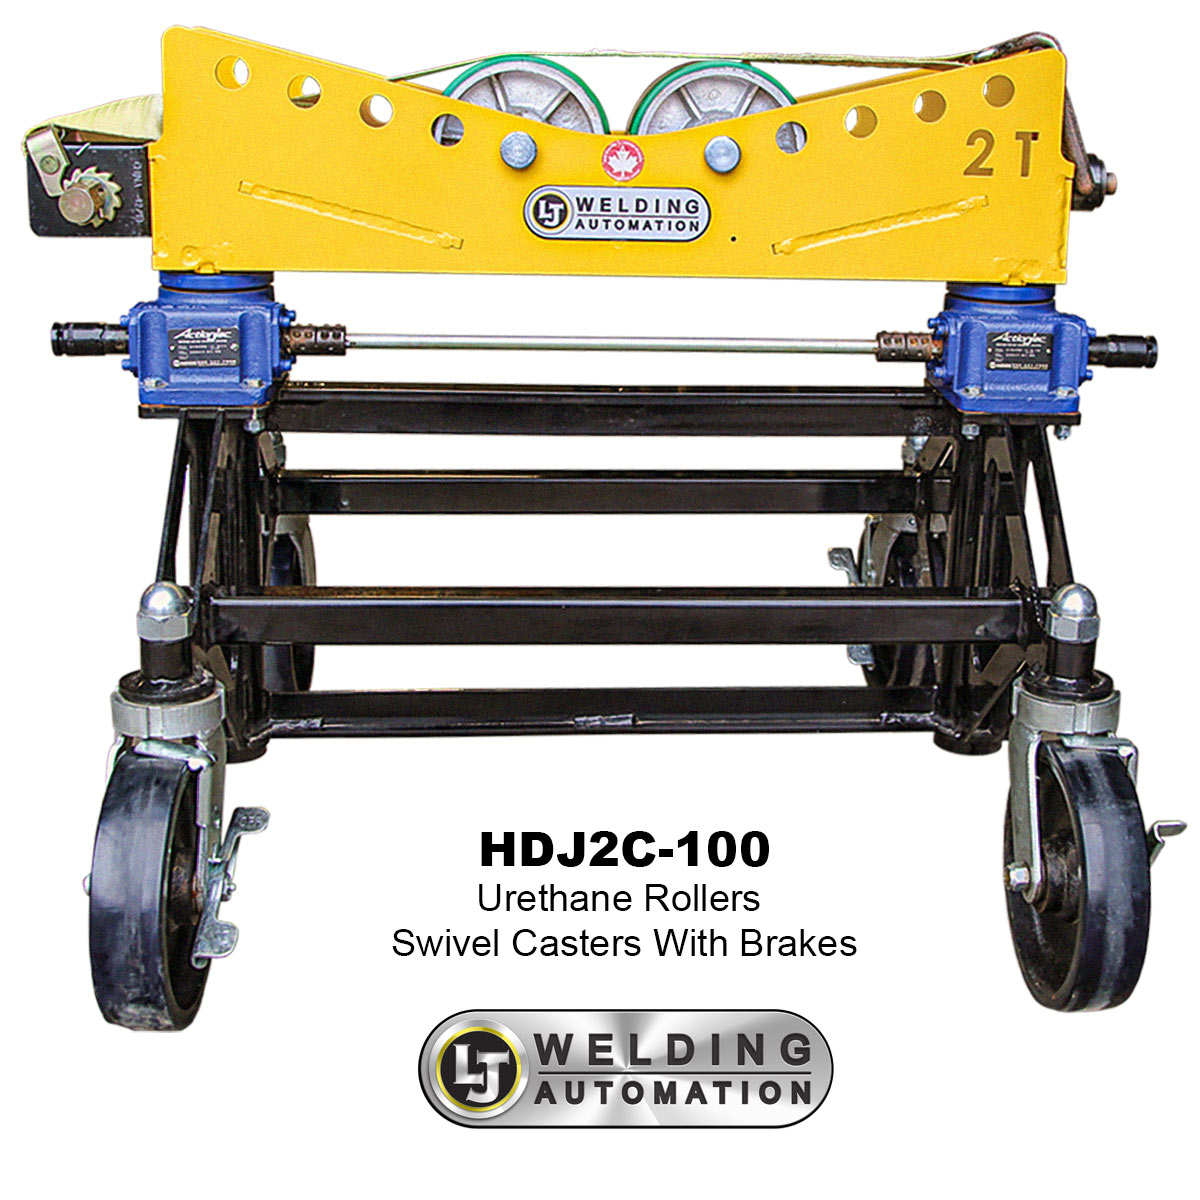 HDJ2C-100 height adjustable pipe stand